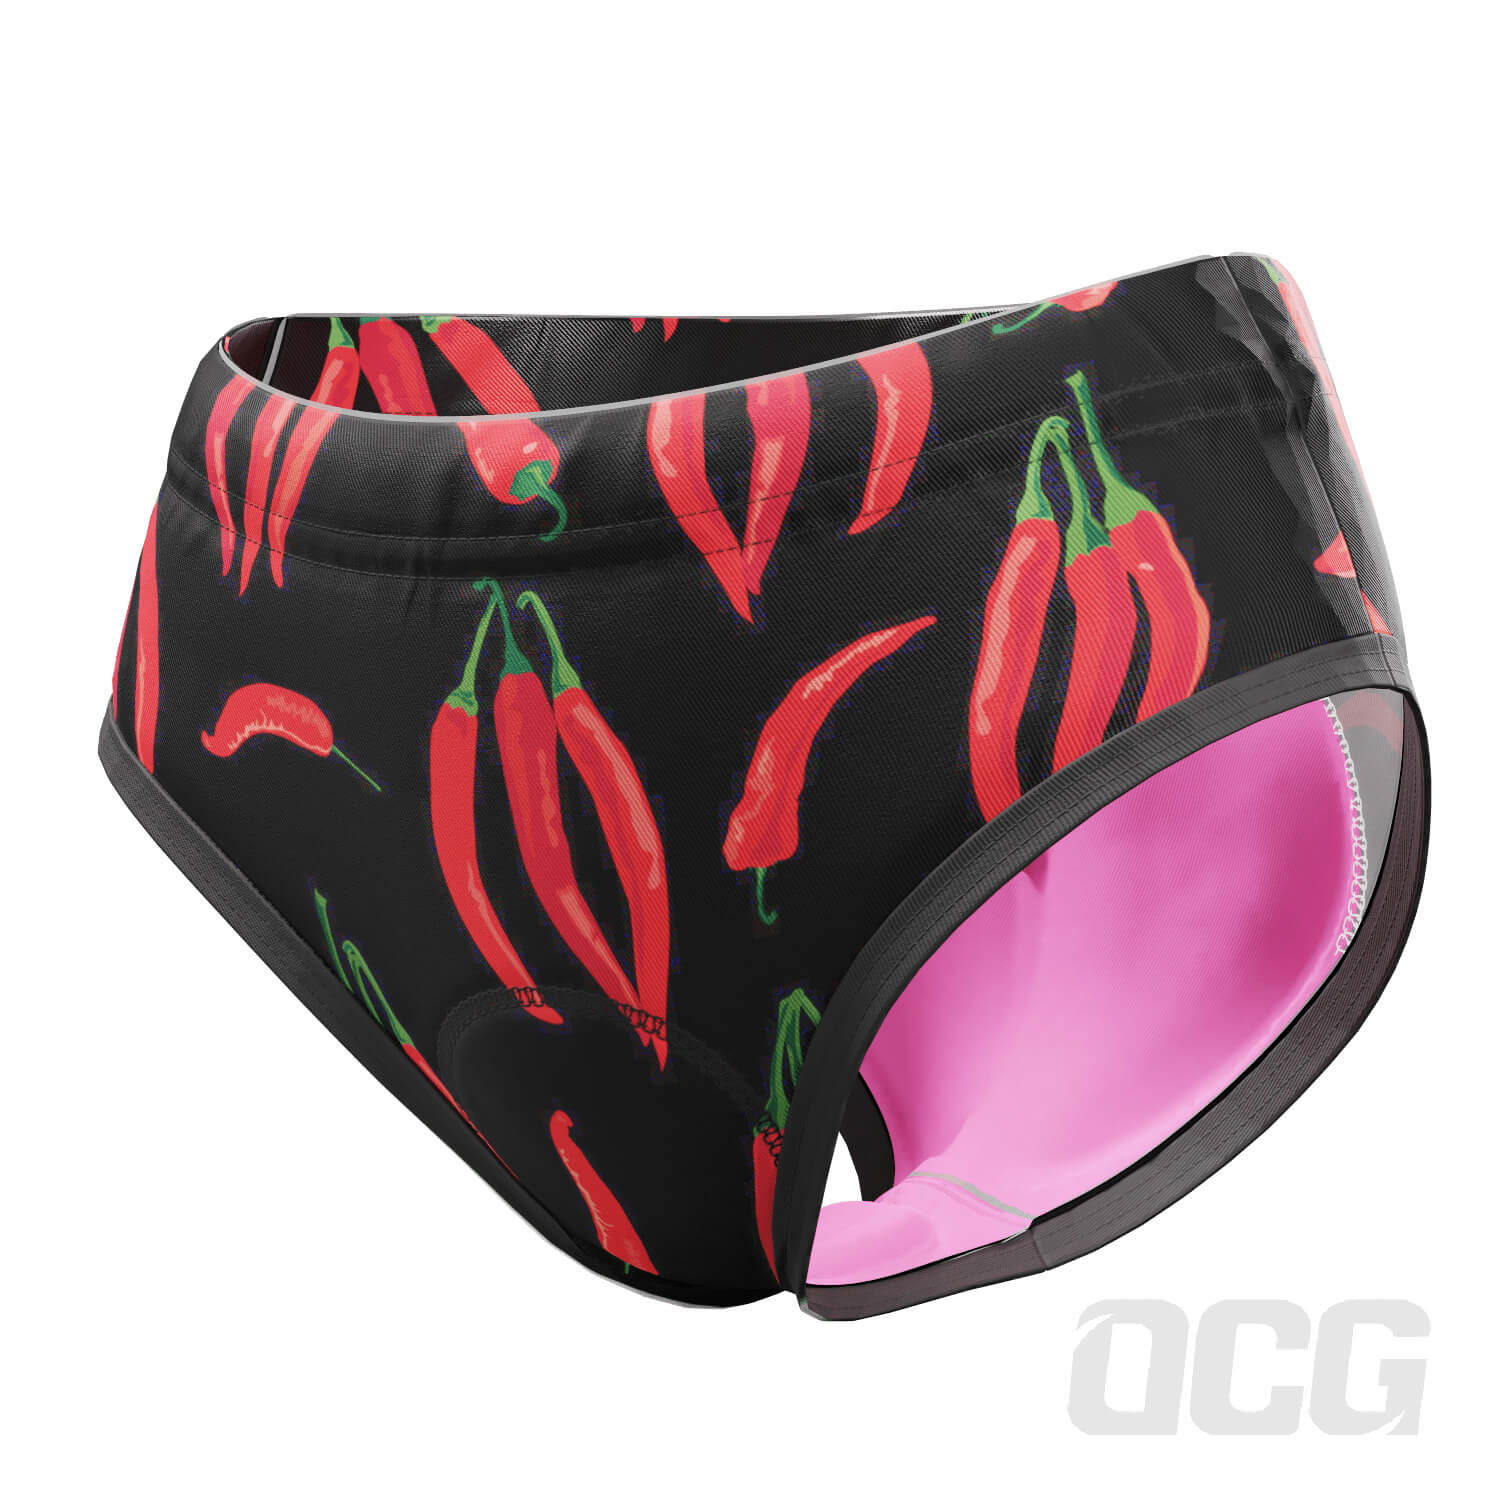 Women's Hot Red Chilli Gel Padded Cycling Underwear-Briefs